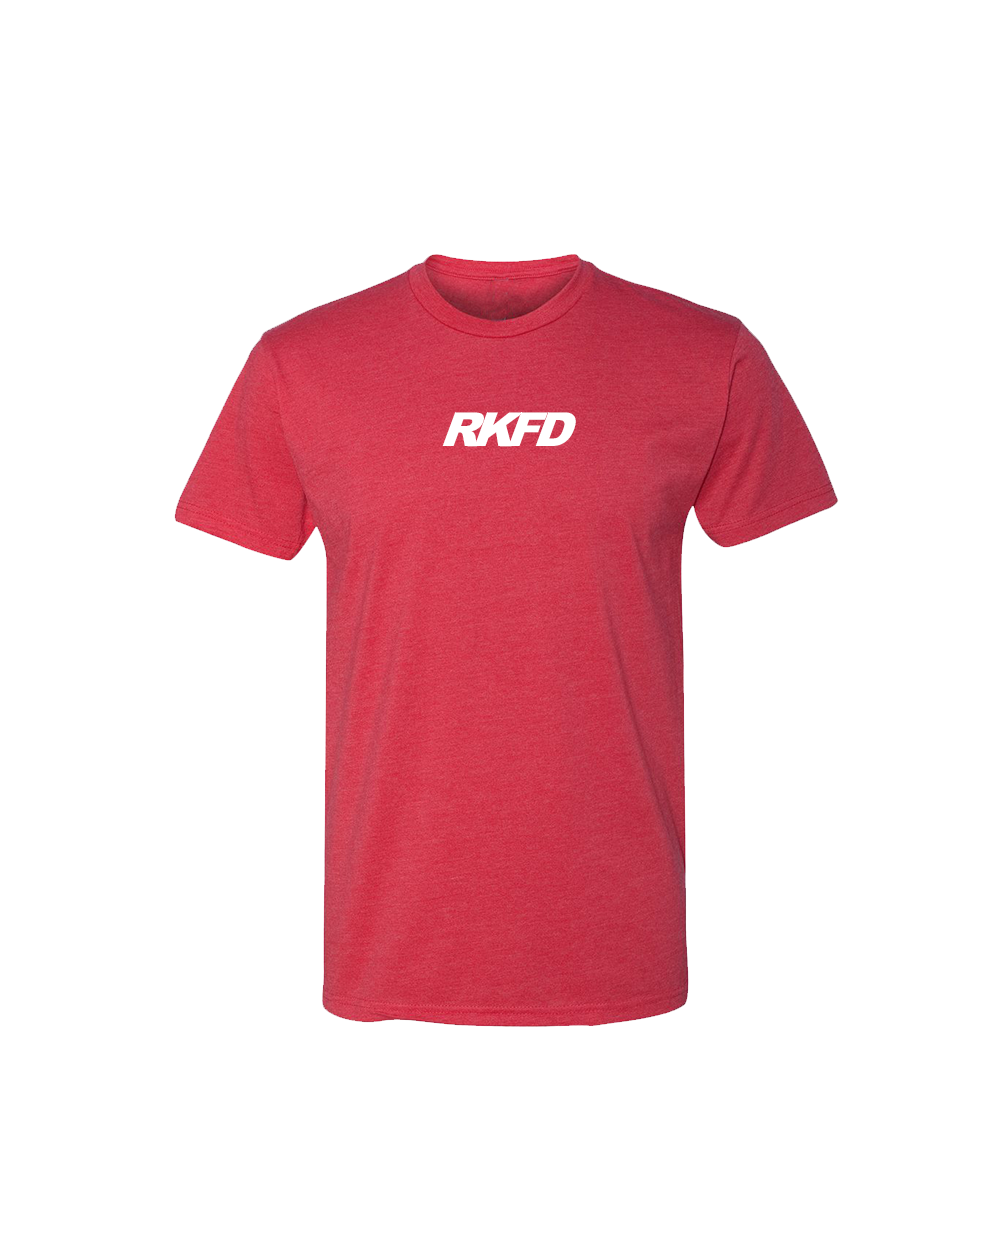 RKFD Gym Shirt (Heather Red)